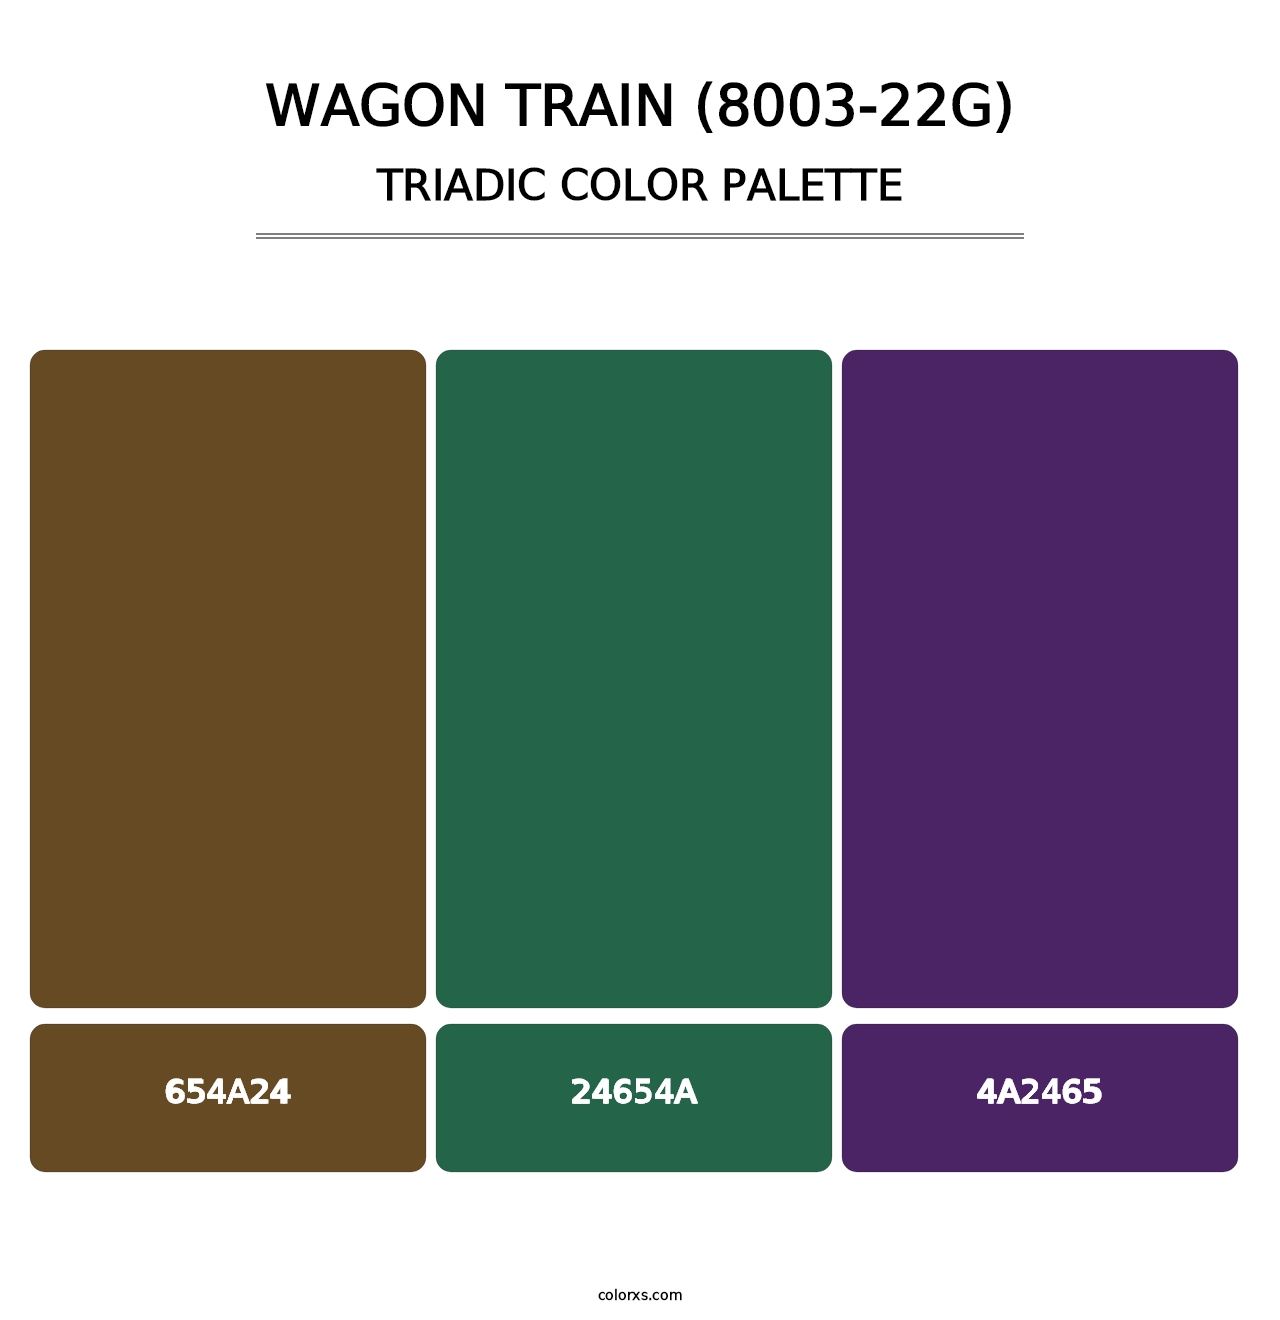 Wagon Train (8003-22G) - Triadic Color Palette